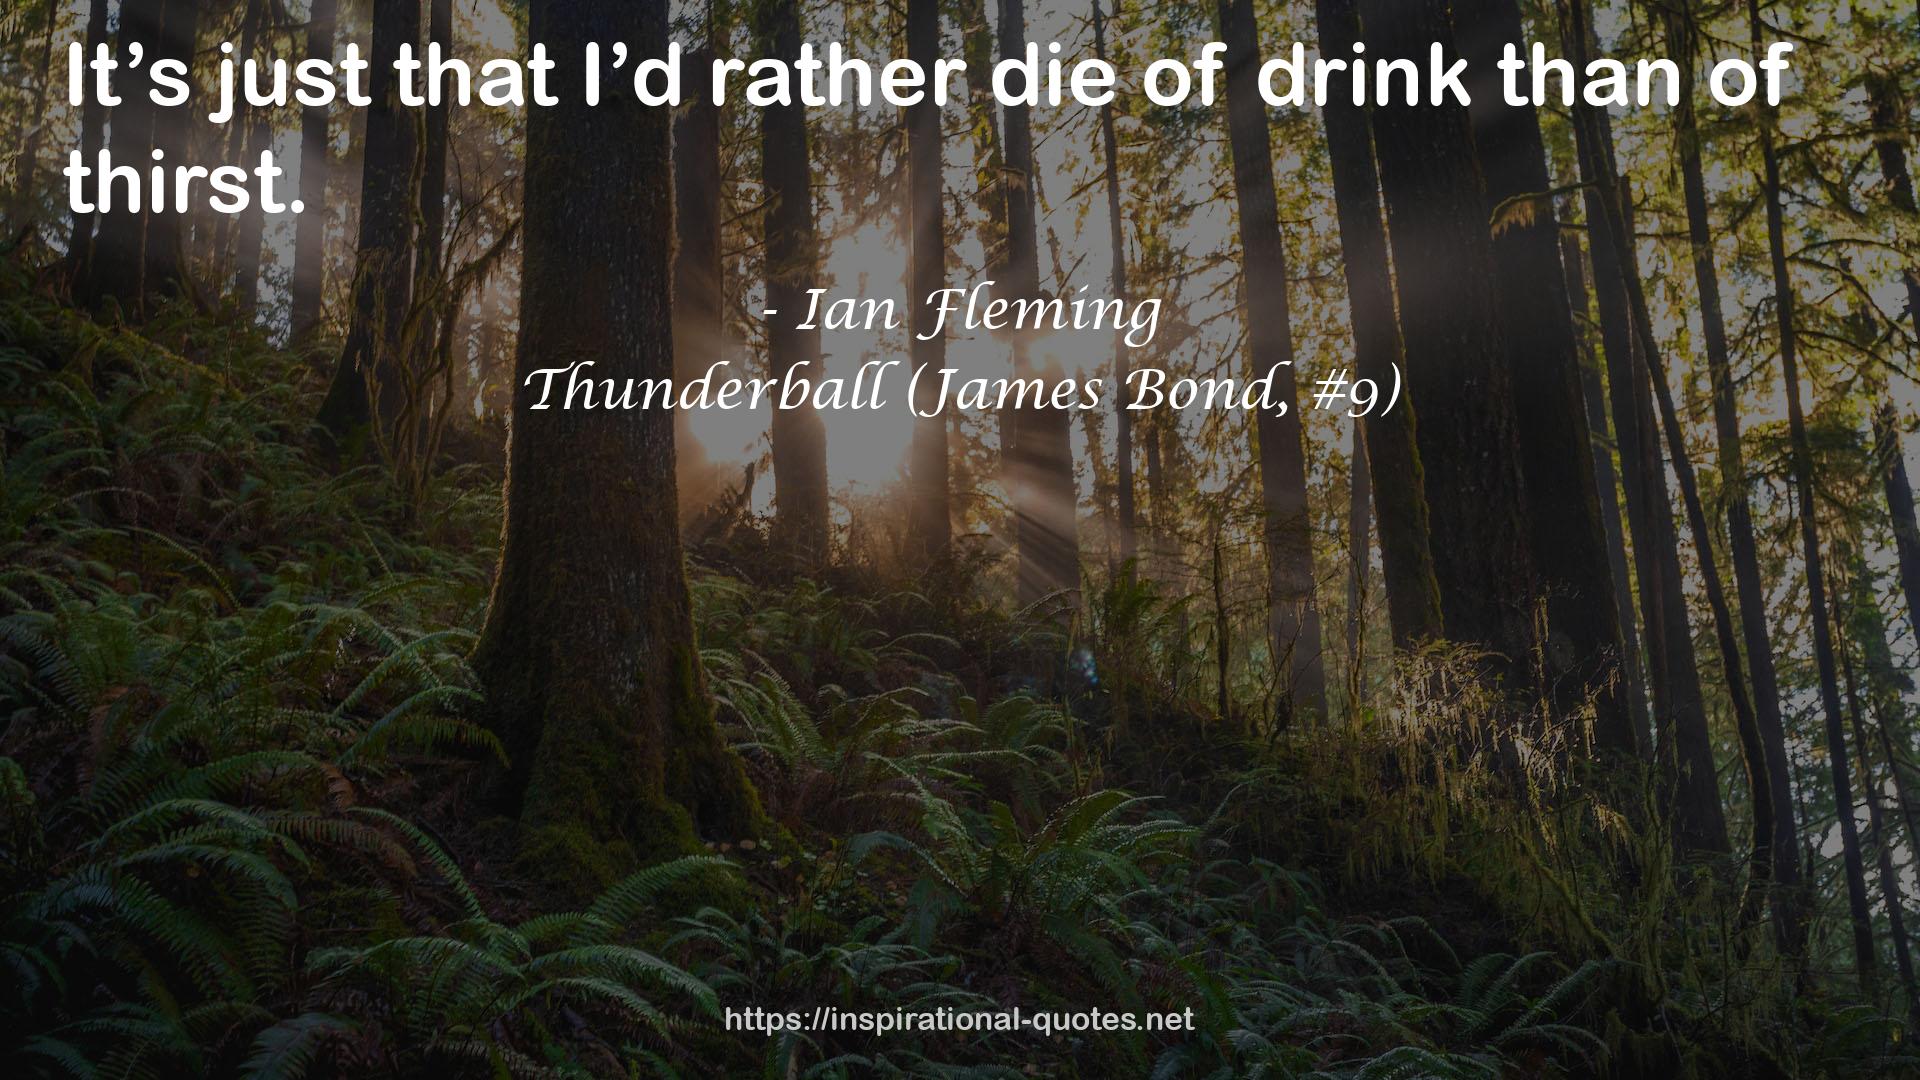 Thunderball (James Bond, #9) QUOTES